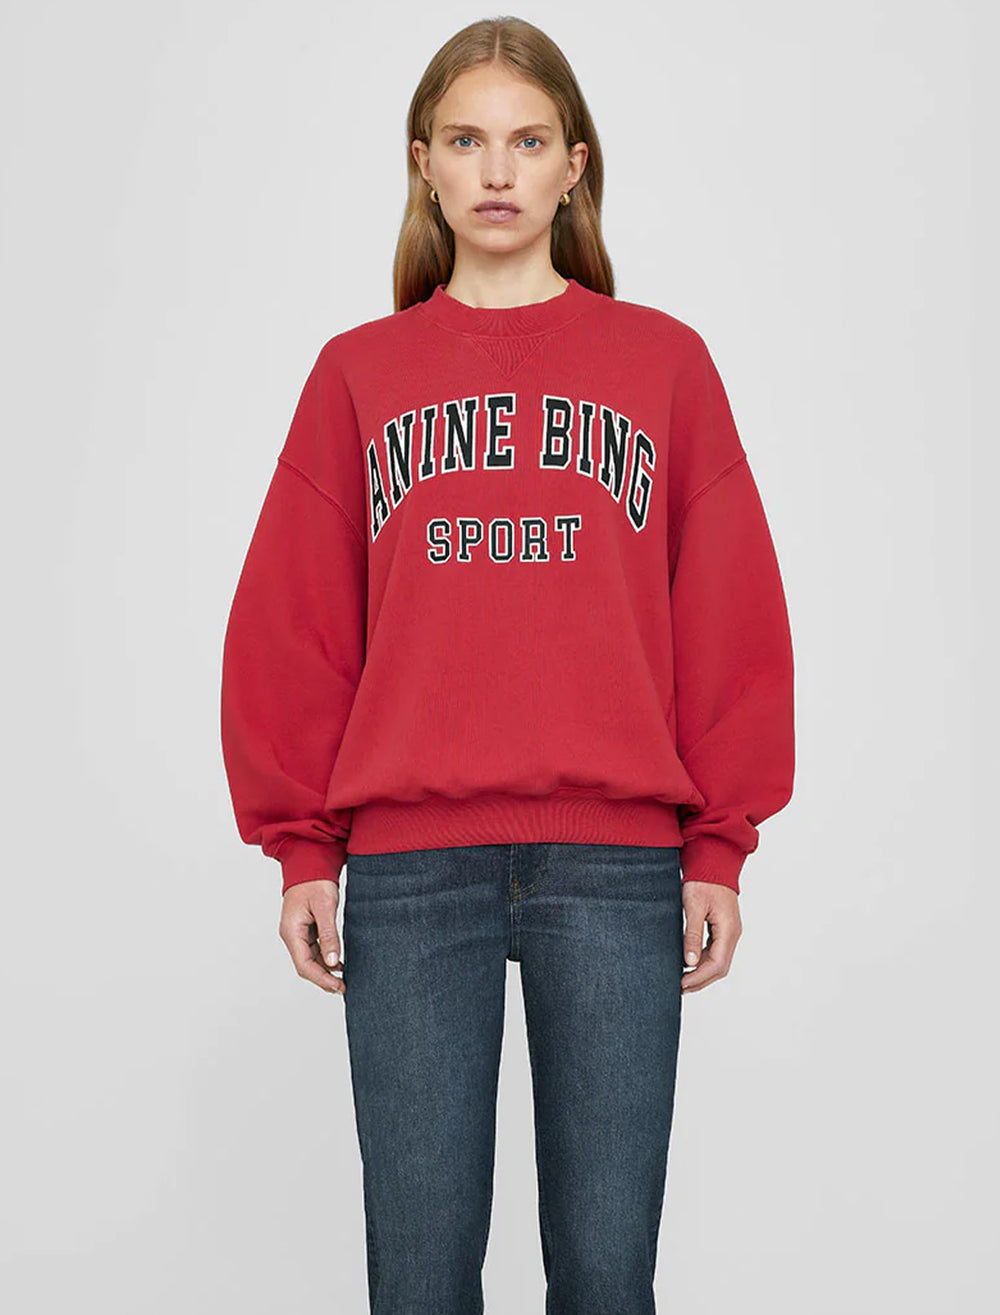 Model wearing Anine Bing's jaci sweatshirt in red.